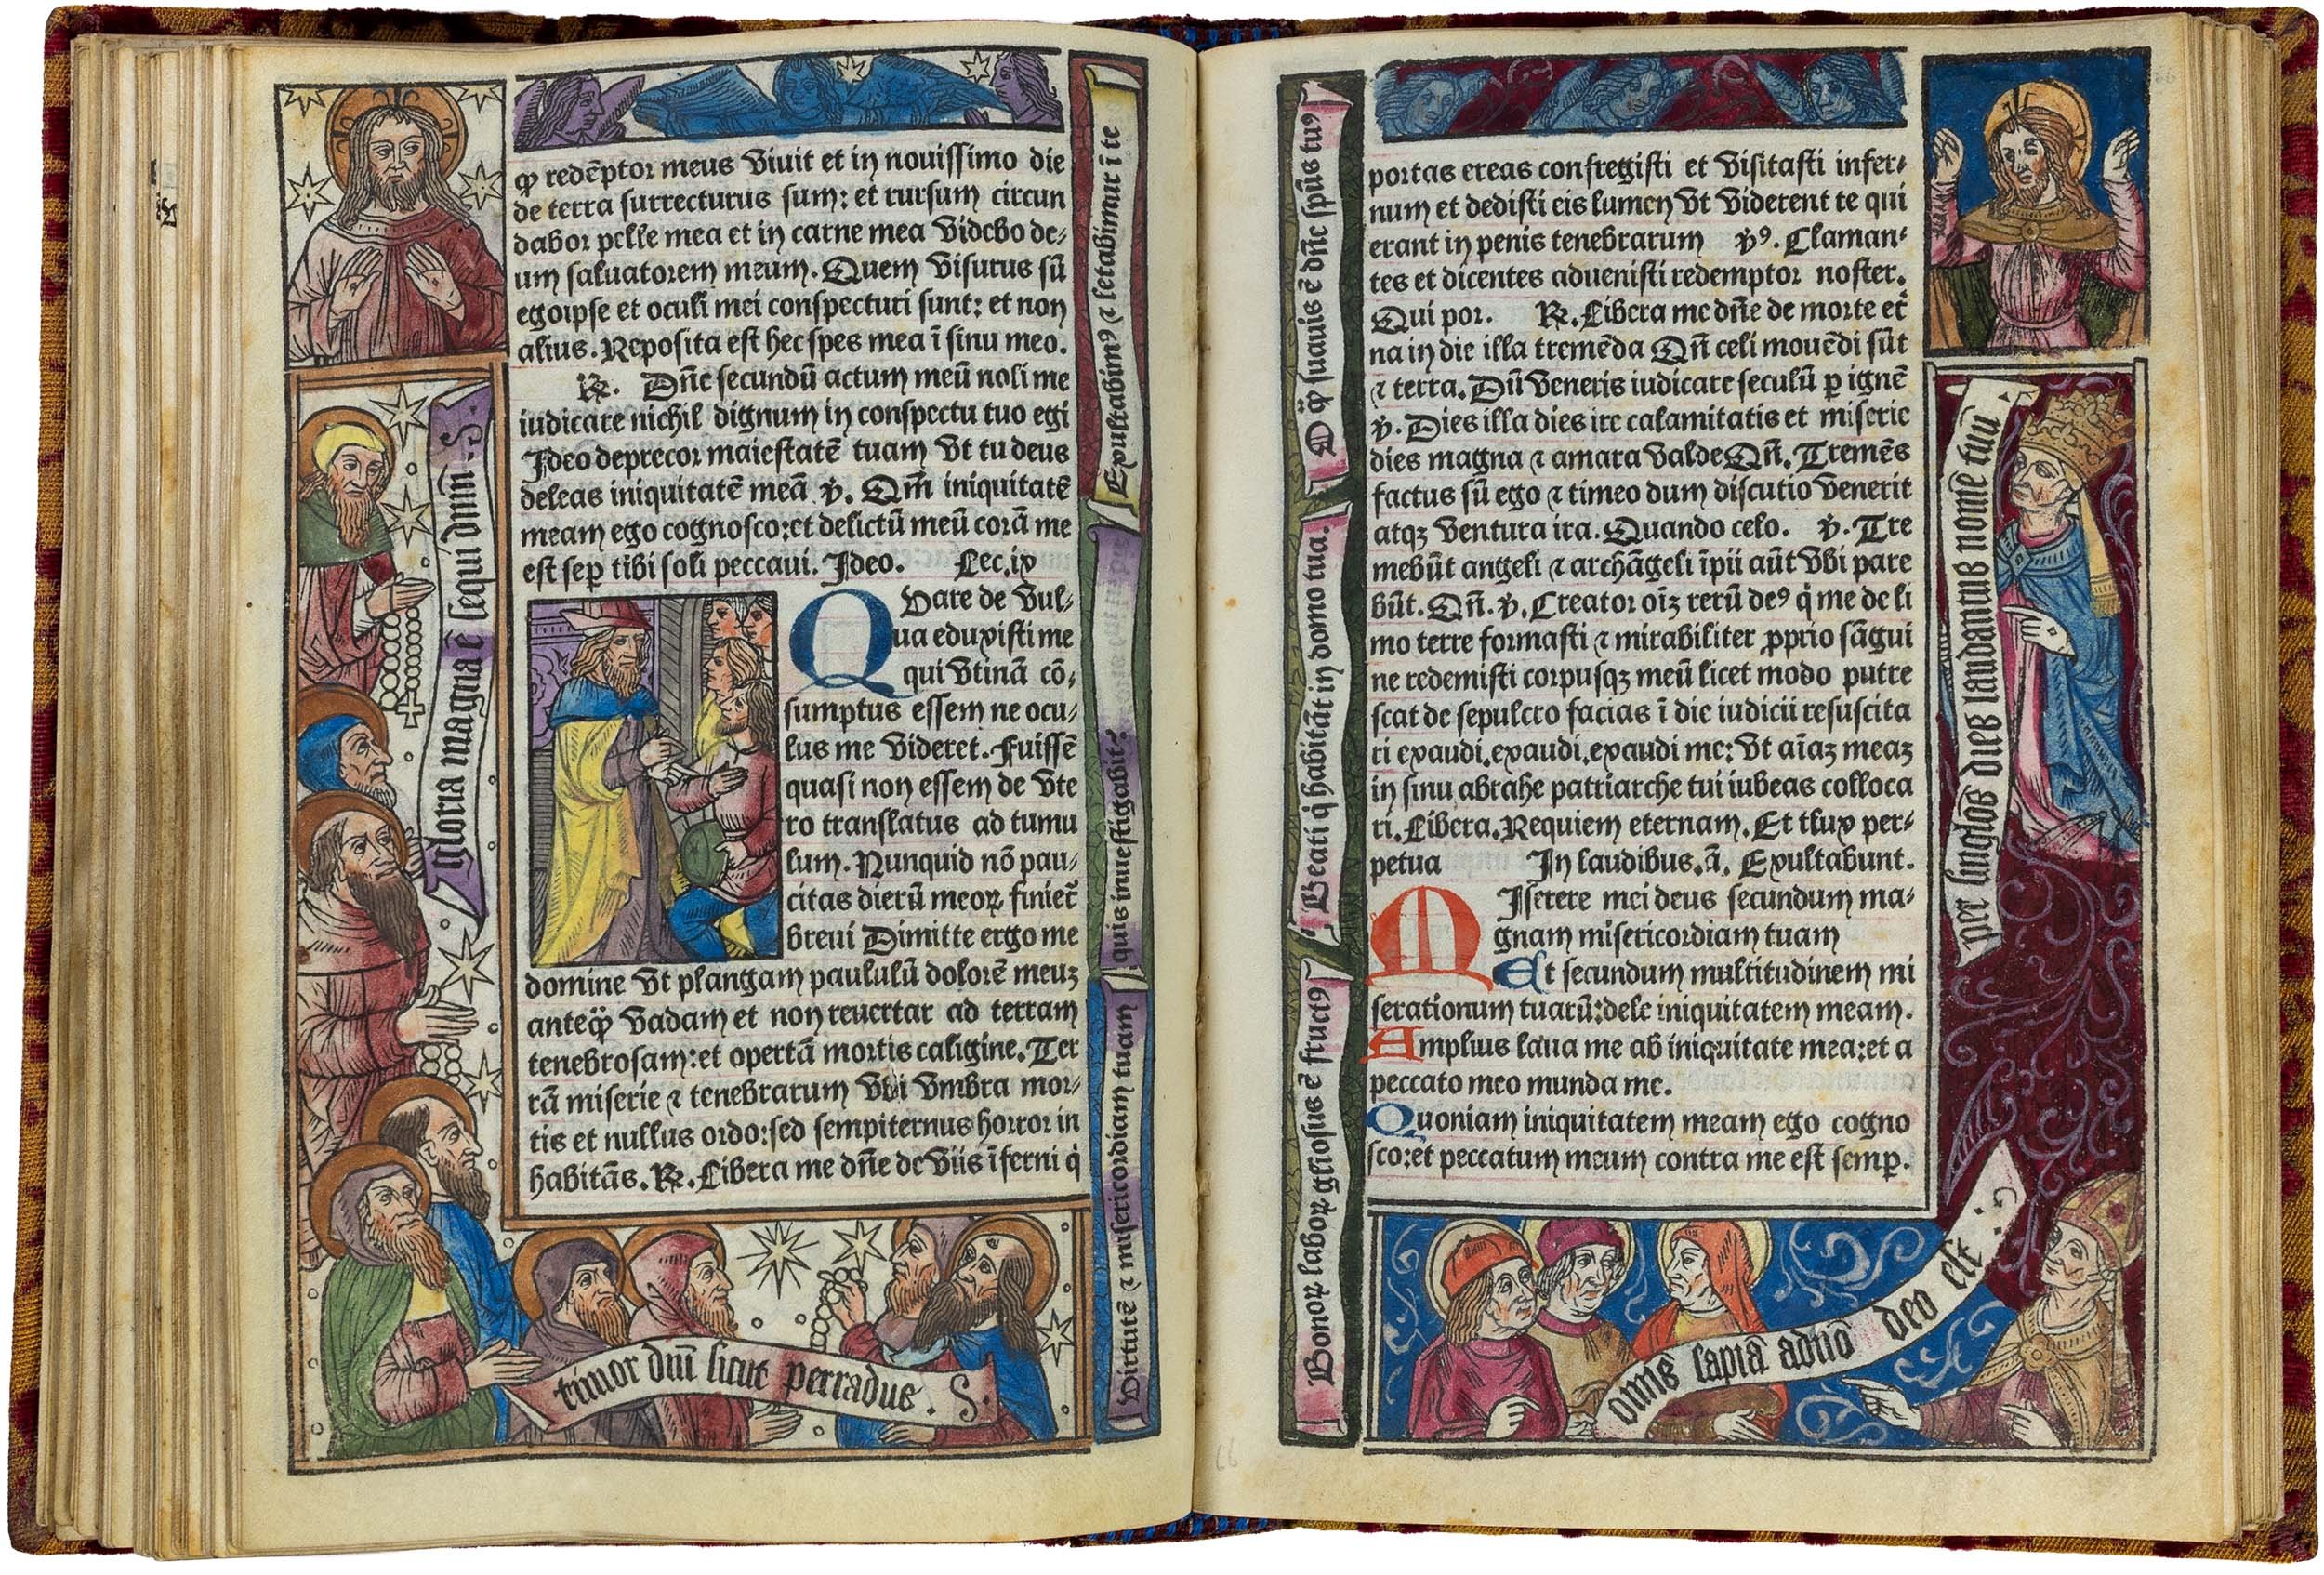 horae-bmv-8.10.1488-dupre-verard-printed-book-of-hours-illuminated-vellum-copy-king-charles-viii-68.jpg